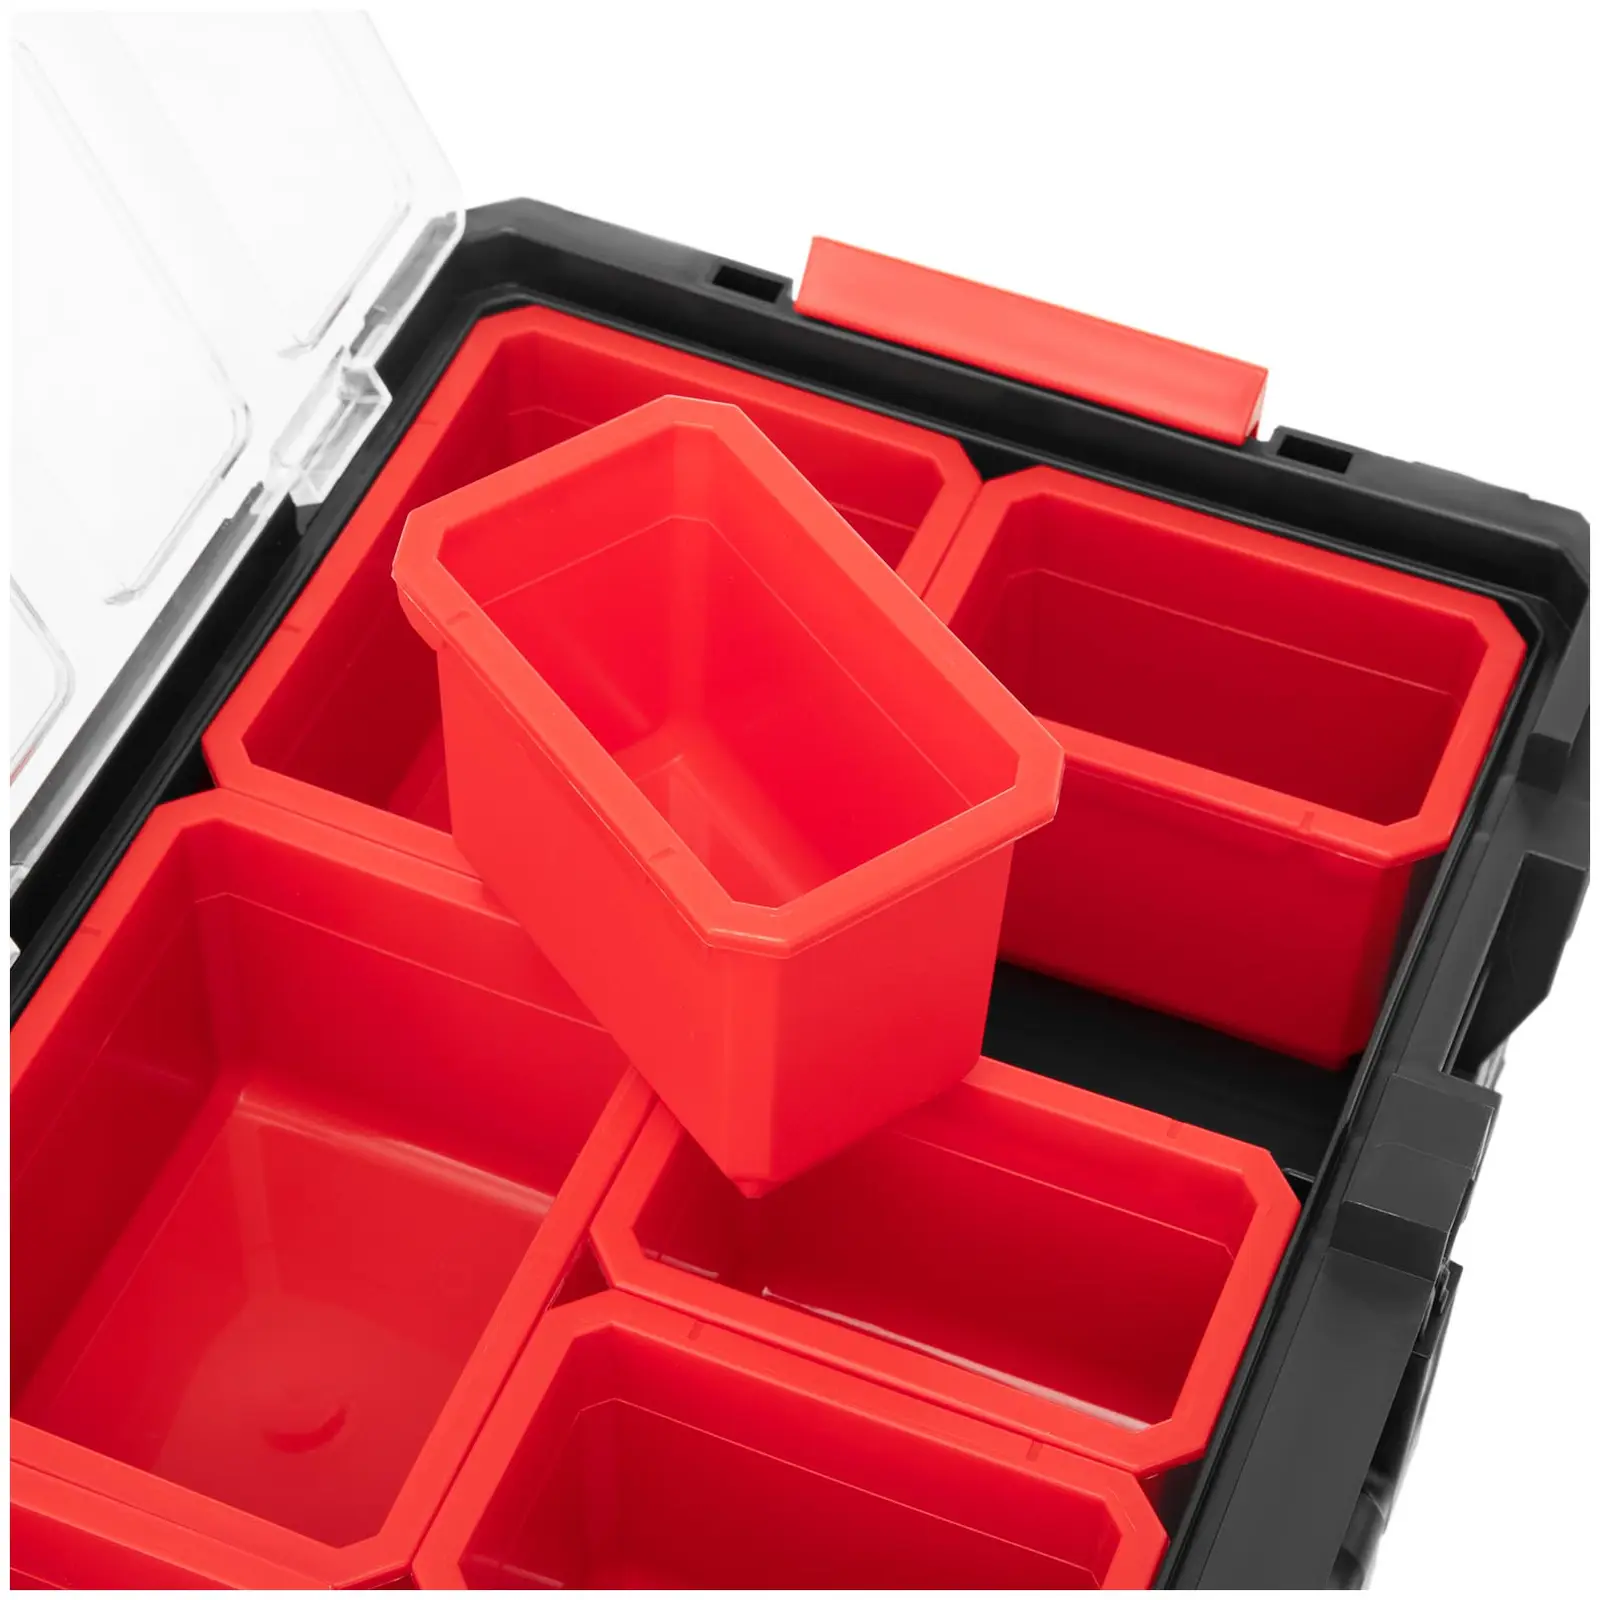 6-i-1 Organizer FLEX Plus verktygslåda - Set inkl. låda, box och organizer